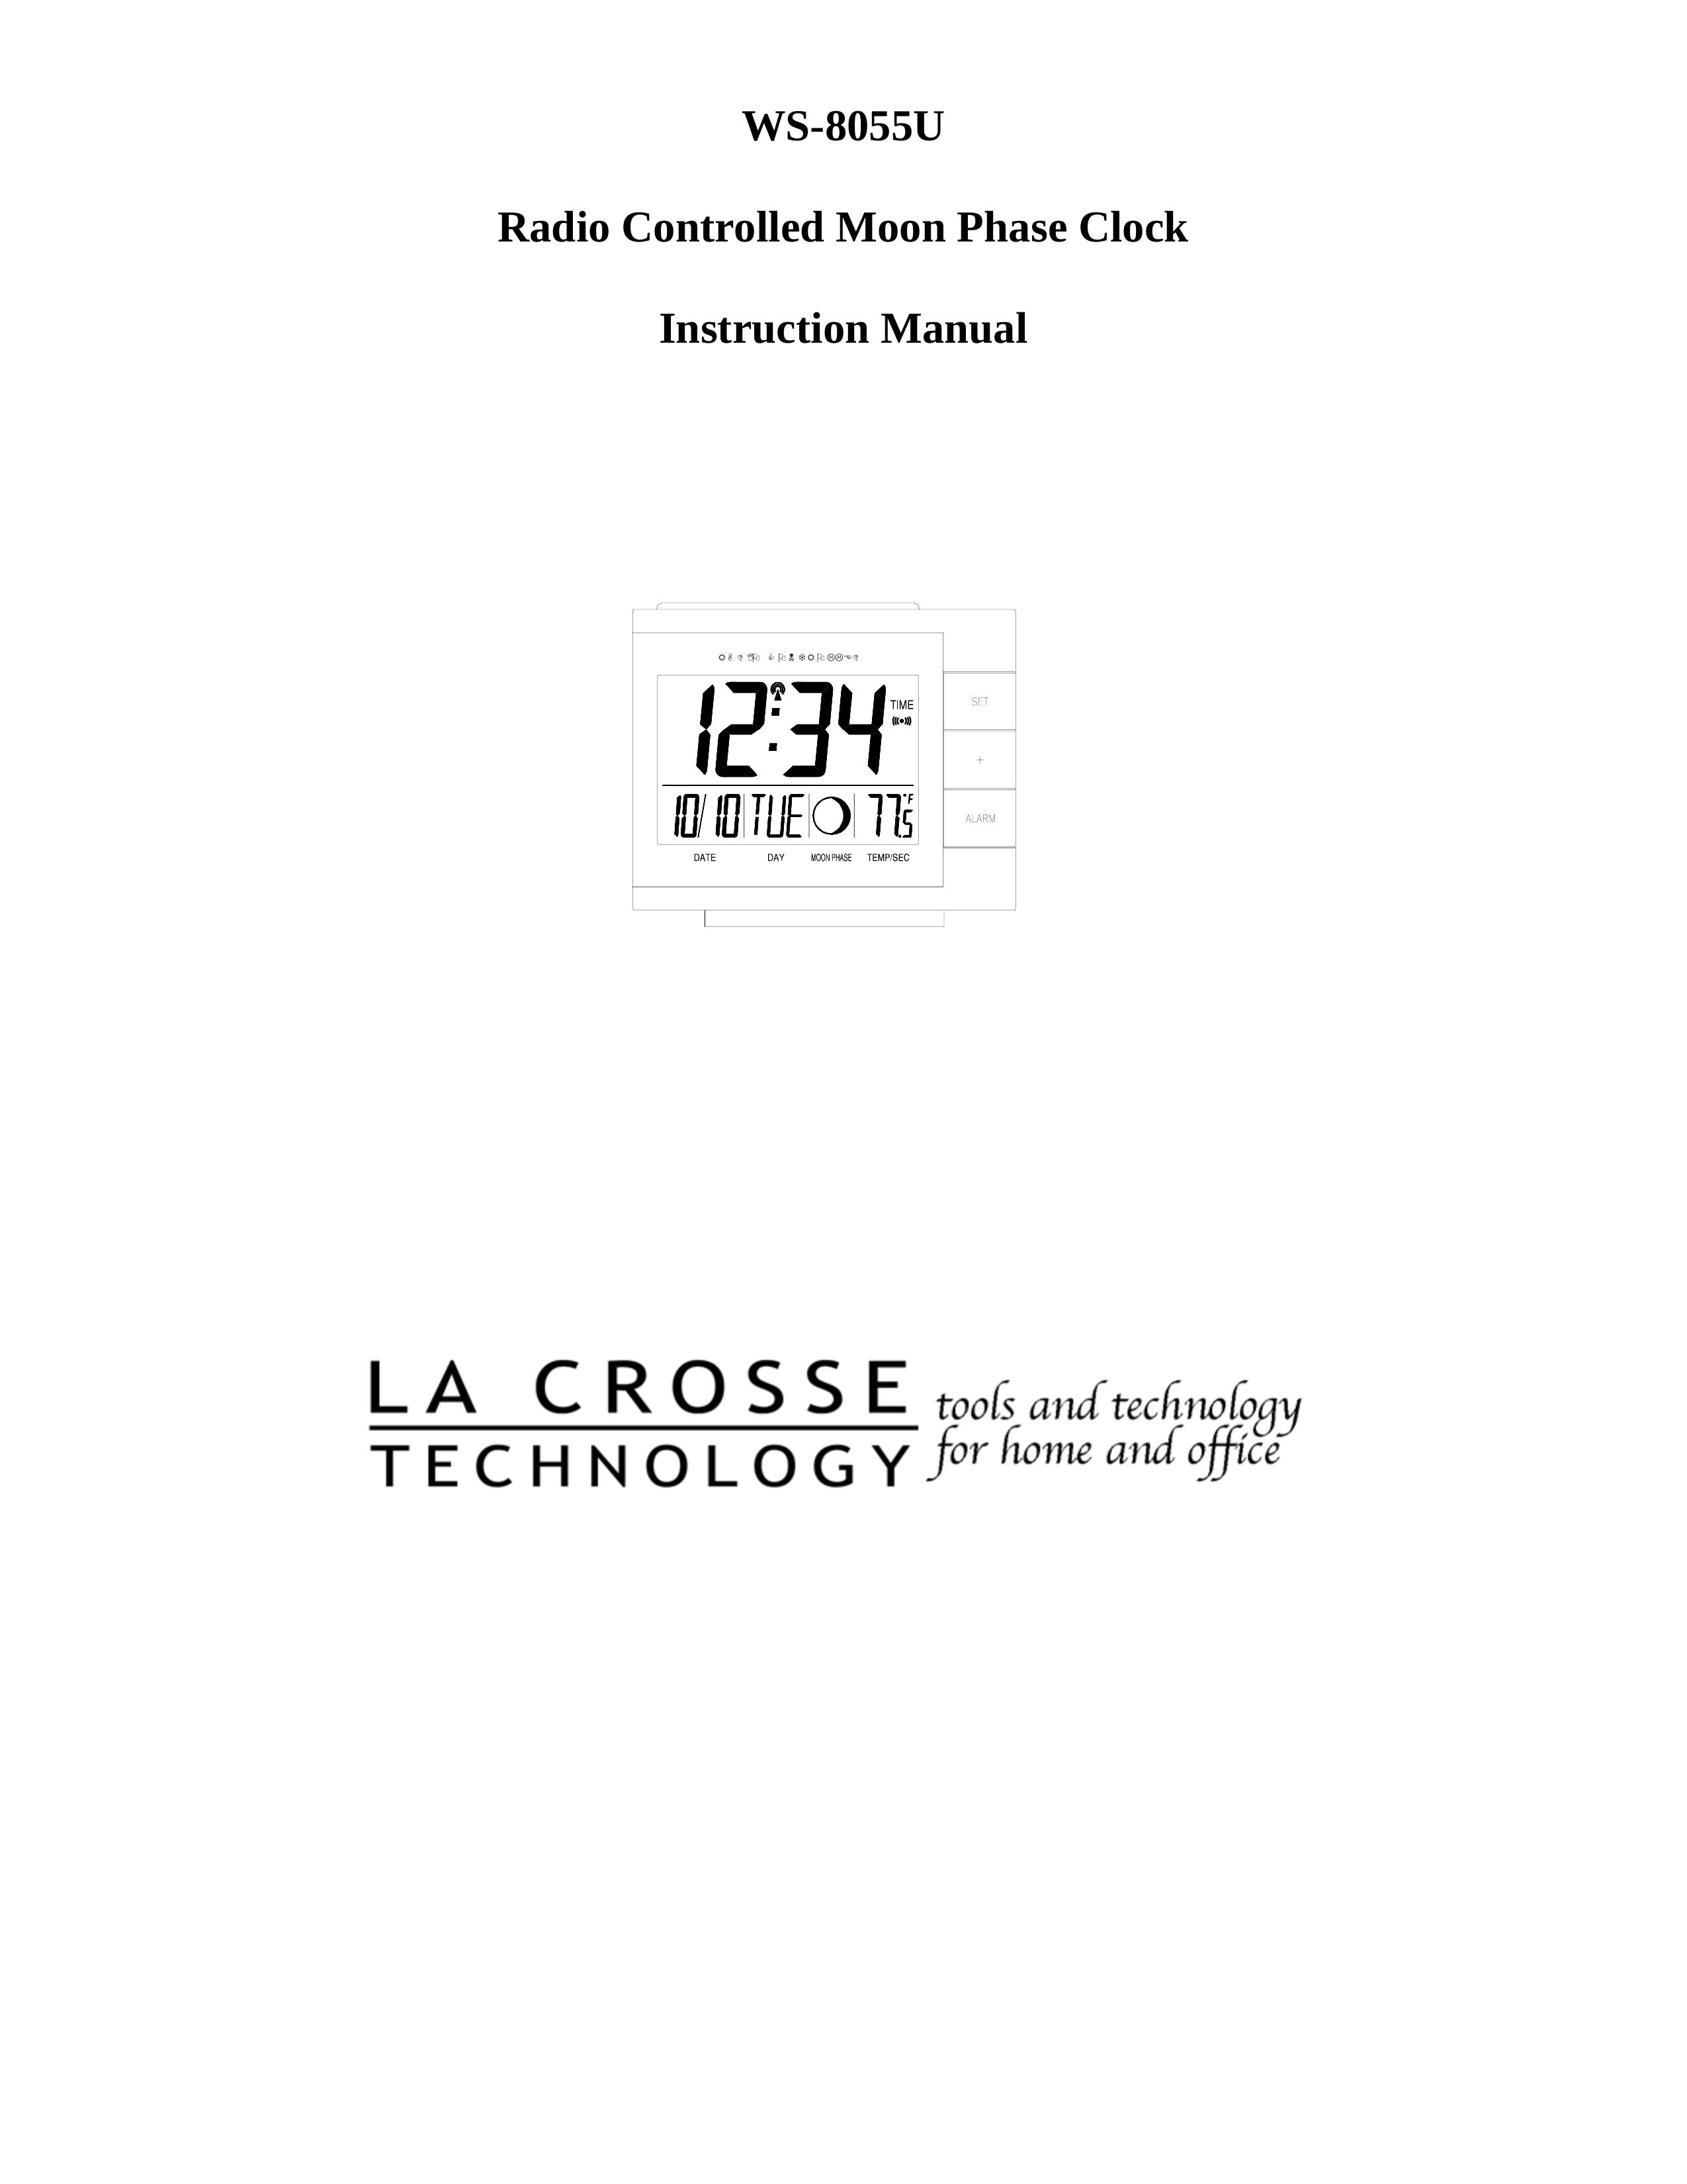 La Crosse Technology WS-8055U Clock Radio User Manual